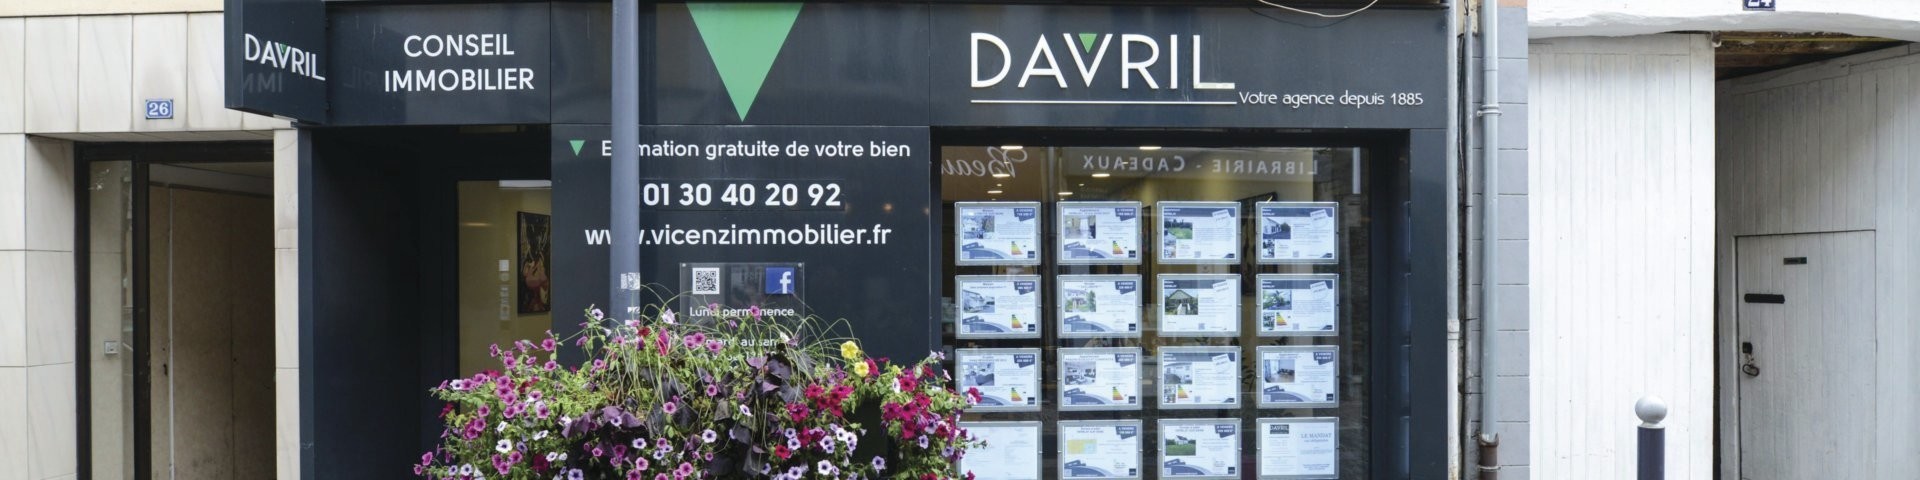 Boutique DAVRIL - Mon commerce  Herblay